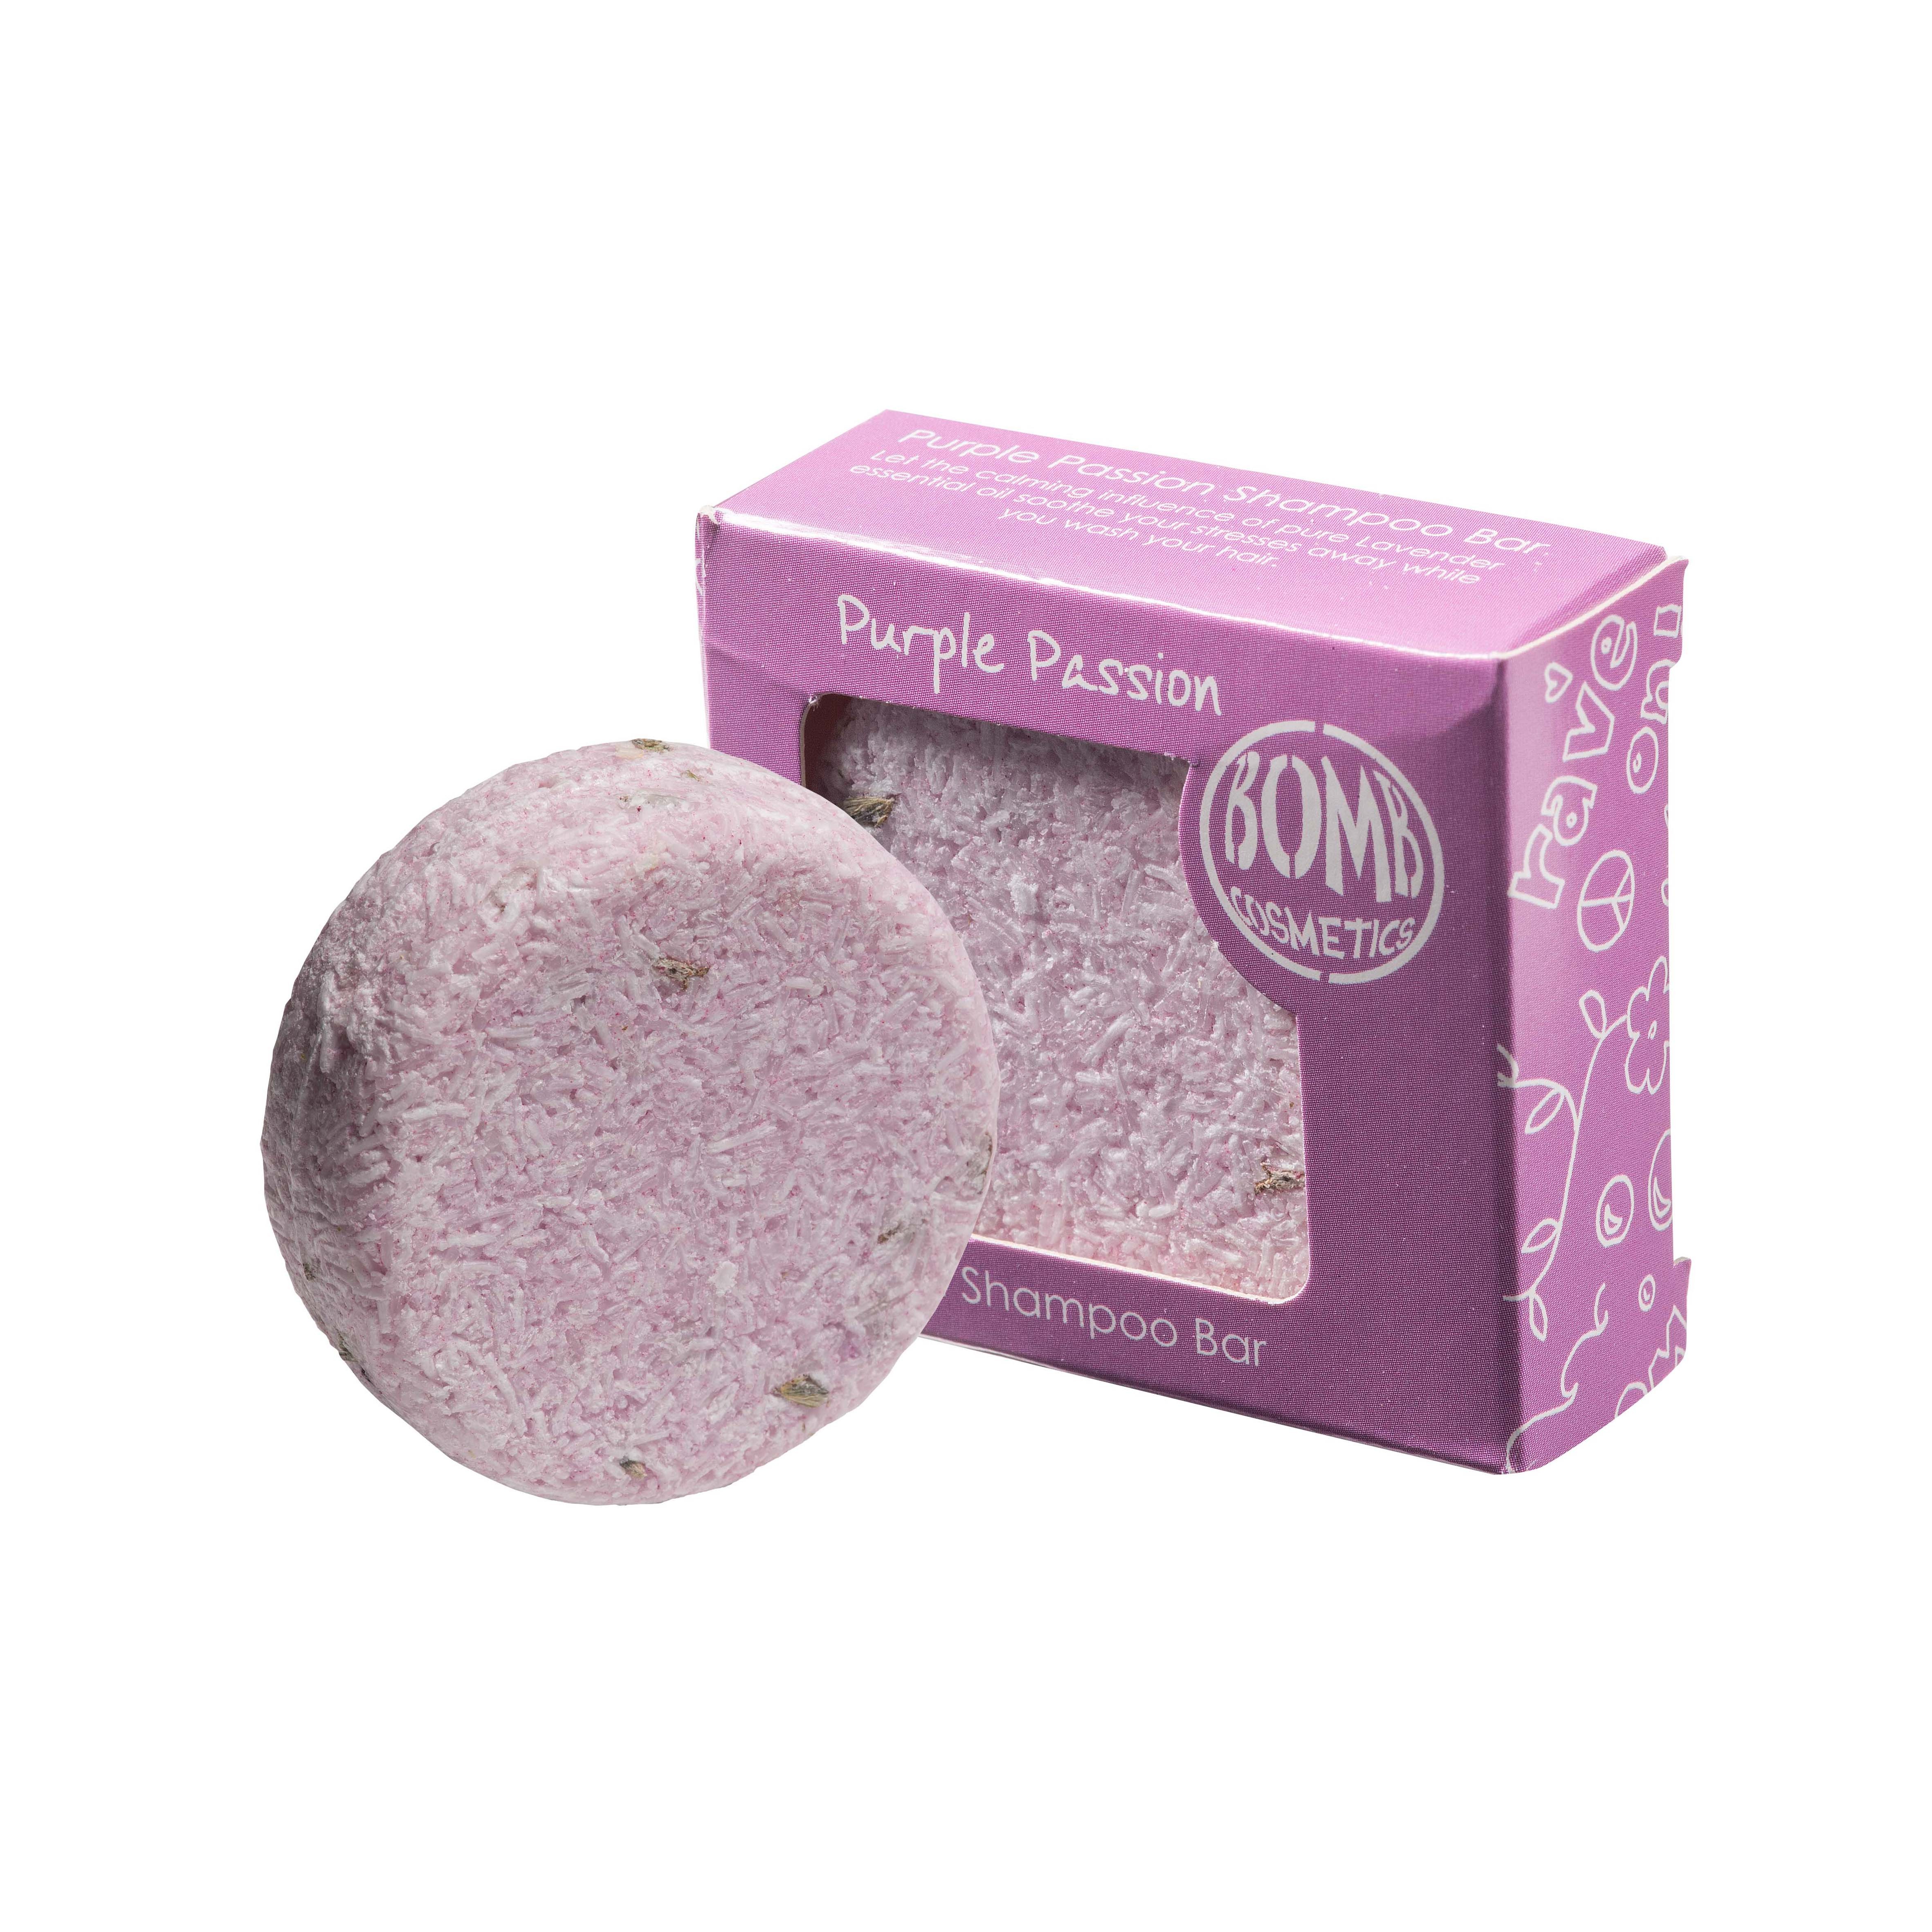 Bomb精油洗髮餅．紫色熱情 50g